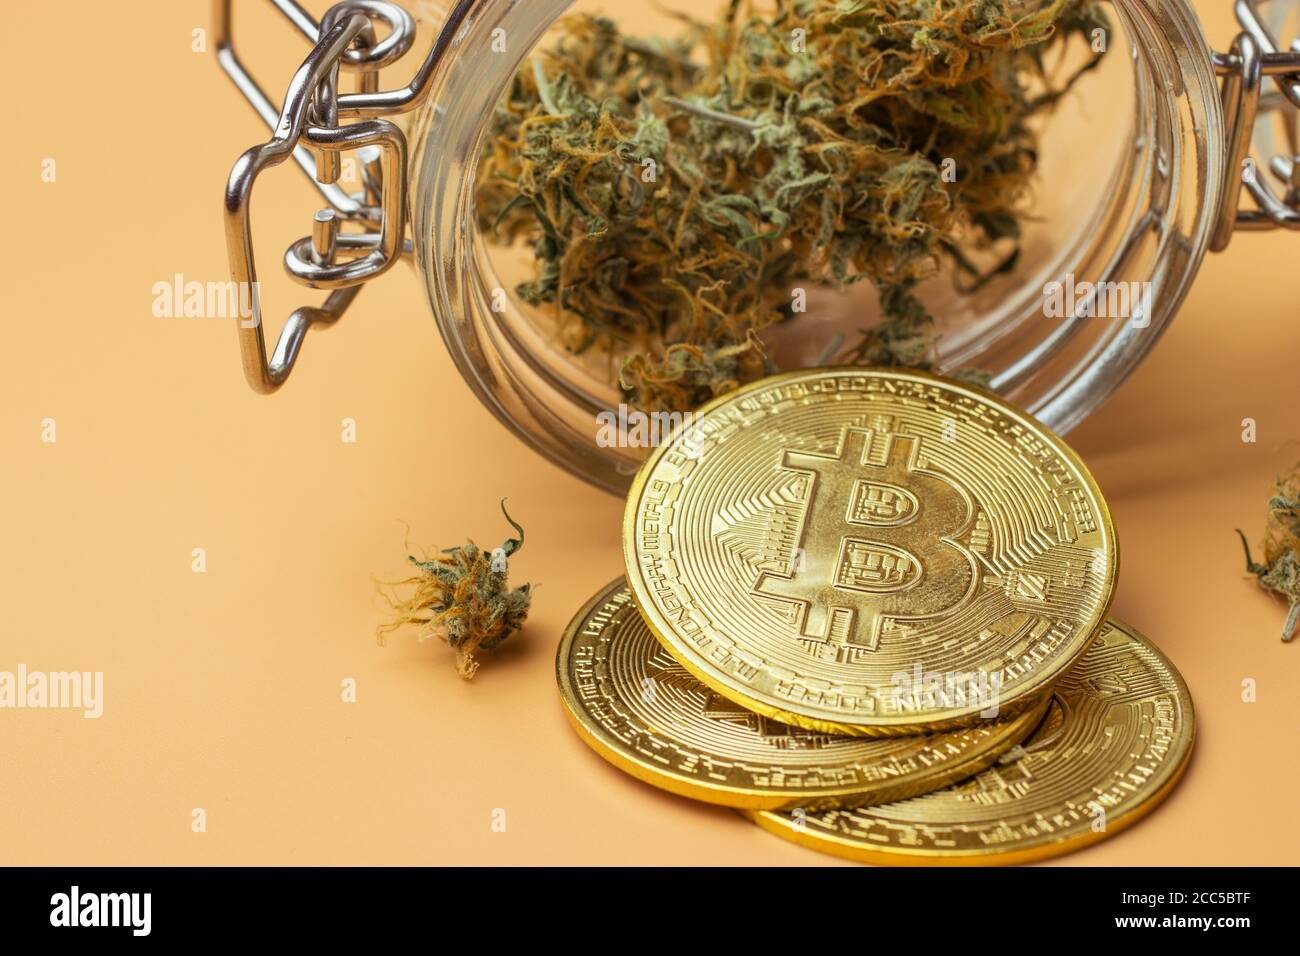 Bitcoin coin next to cannabis buds in glass jar, marijuana on orange background Stock Photo